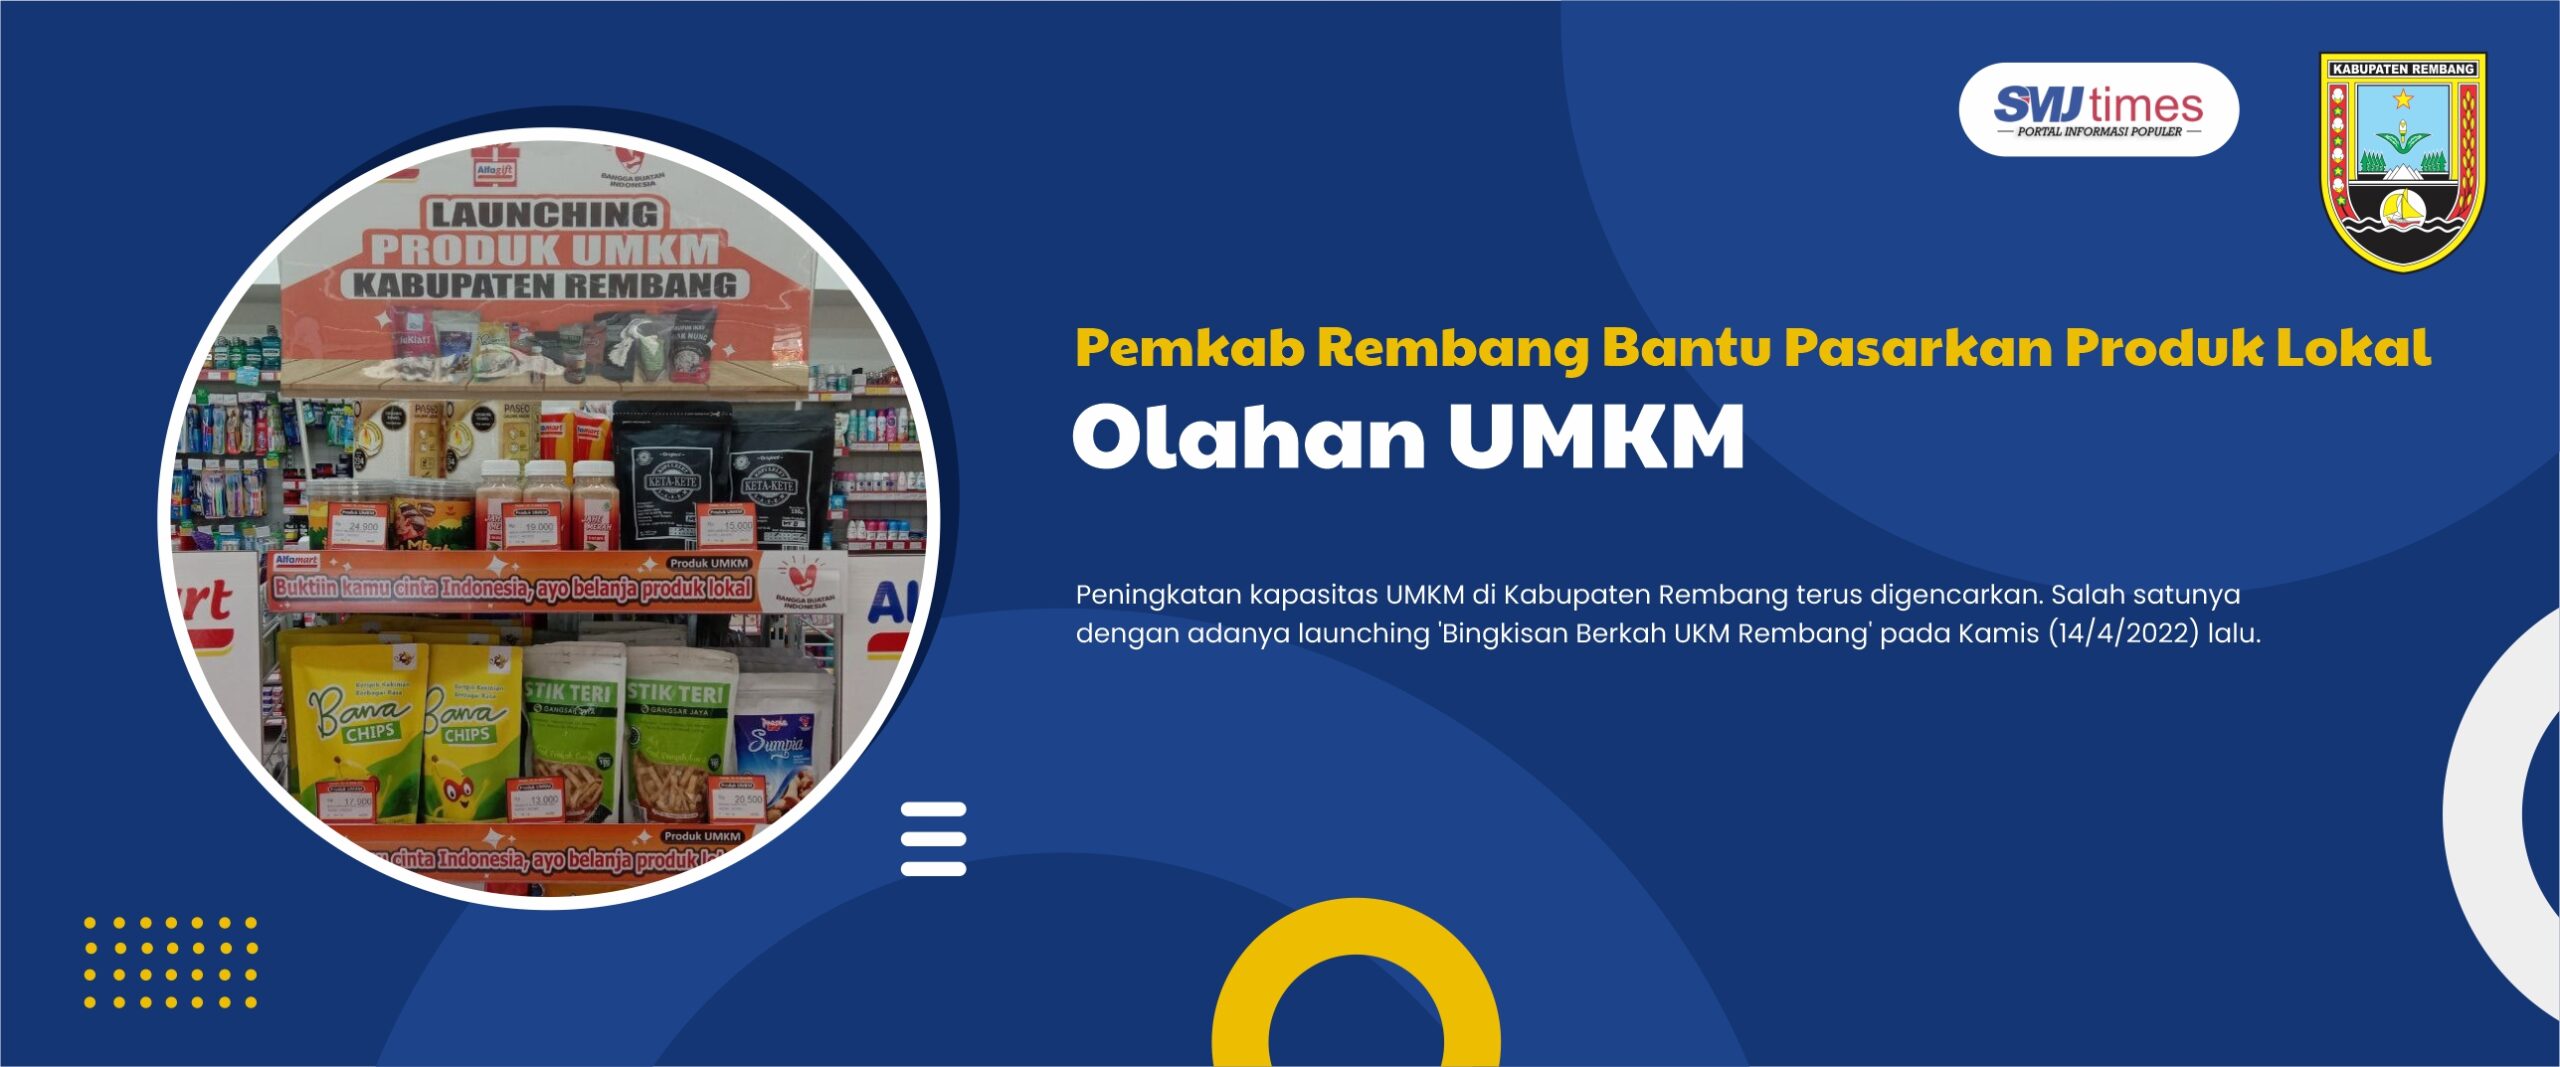 Pemkab Rembang Bantu Pasarkan Produk Lokal Olahan UMKM